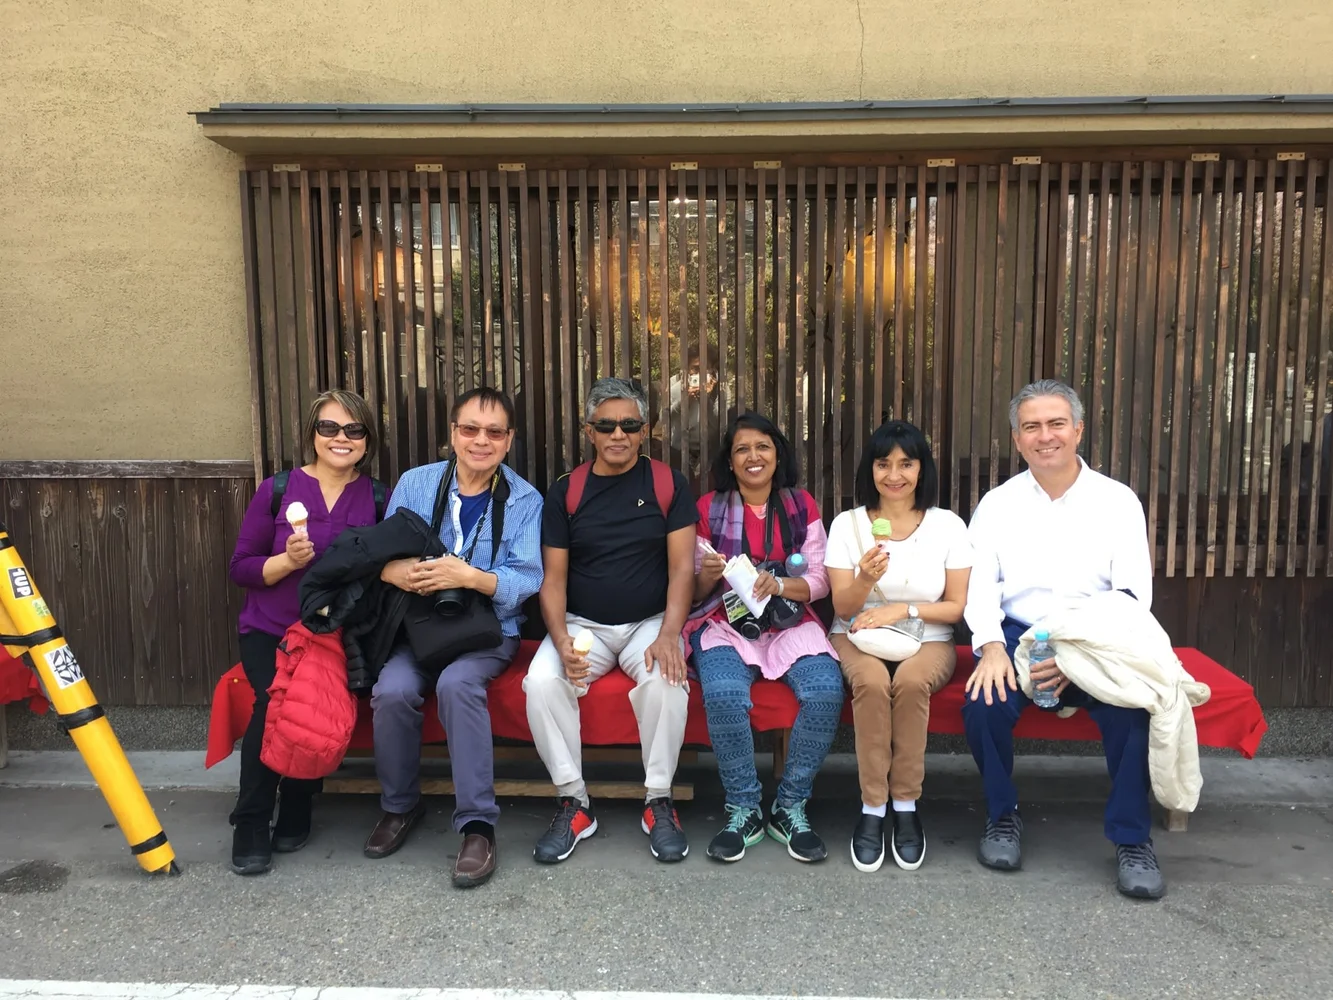 Enjoy a Kyoto Food and Drink Tour in Arashiyama